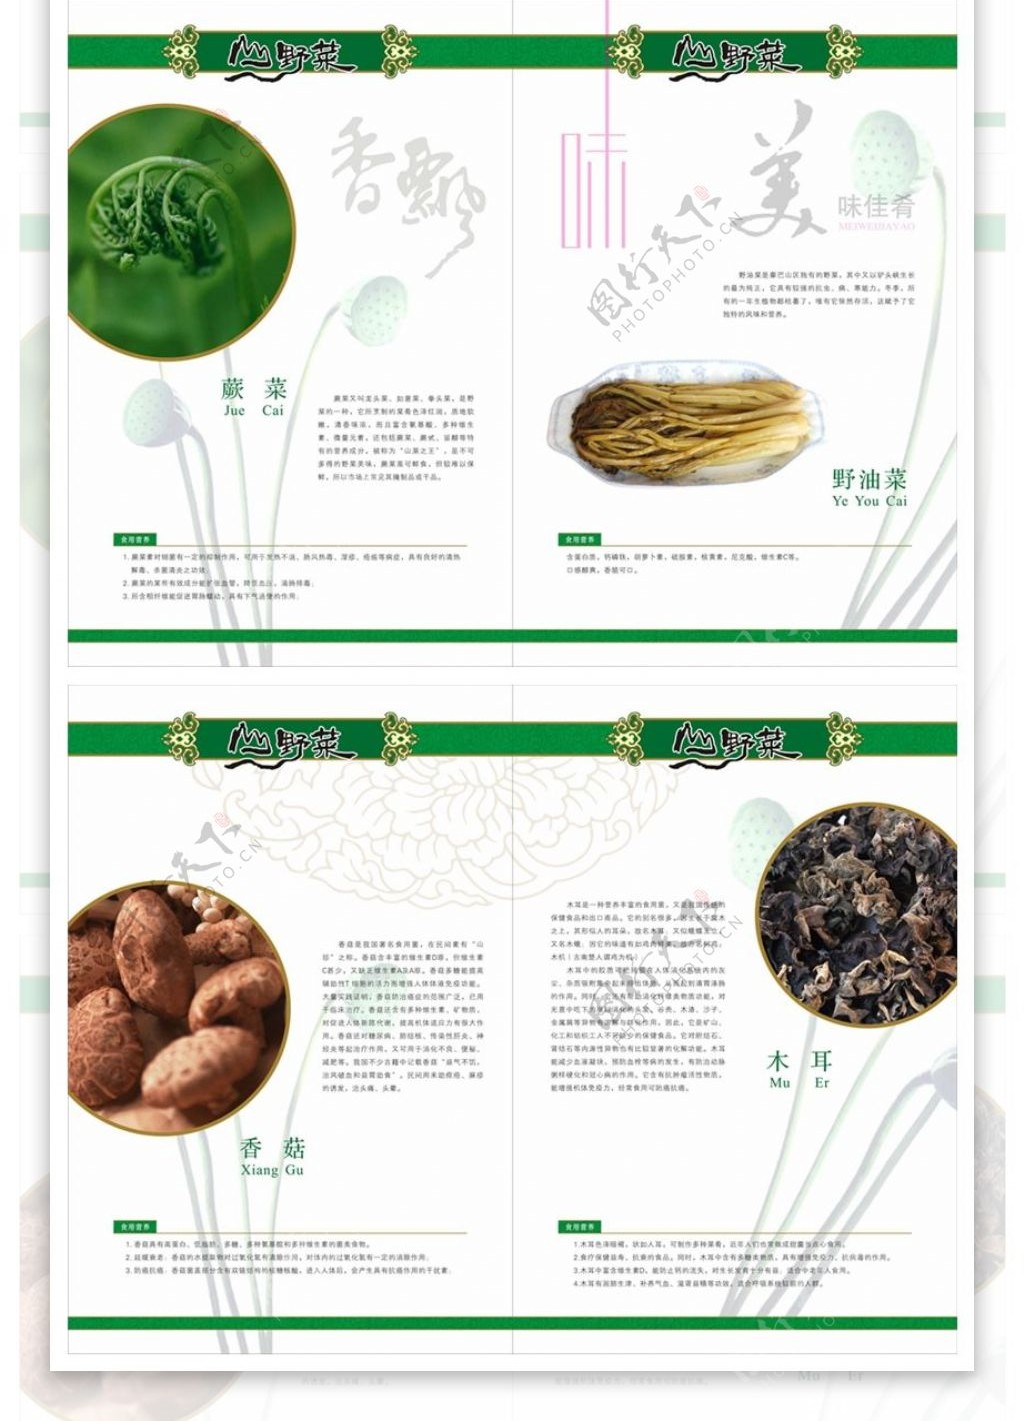 CDR豆干产品宣传画册素材下载